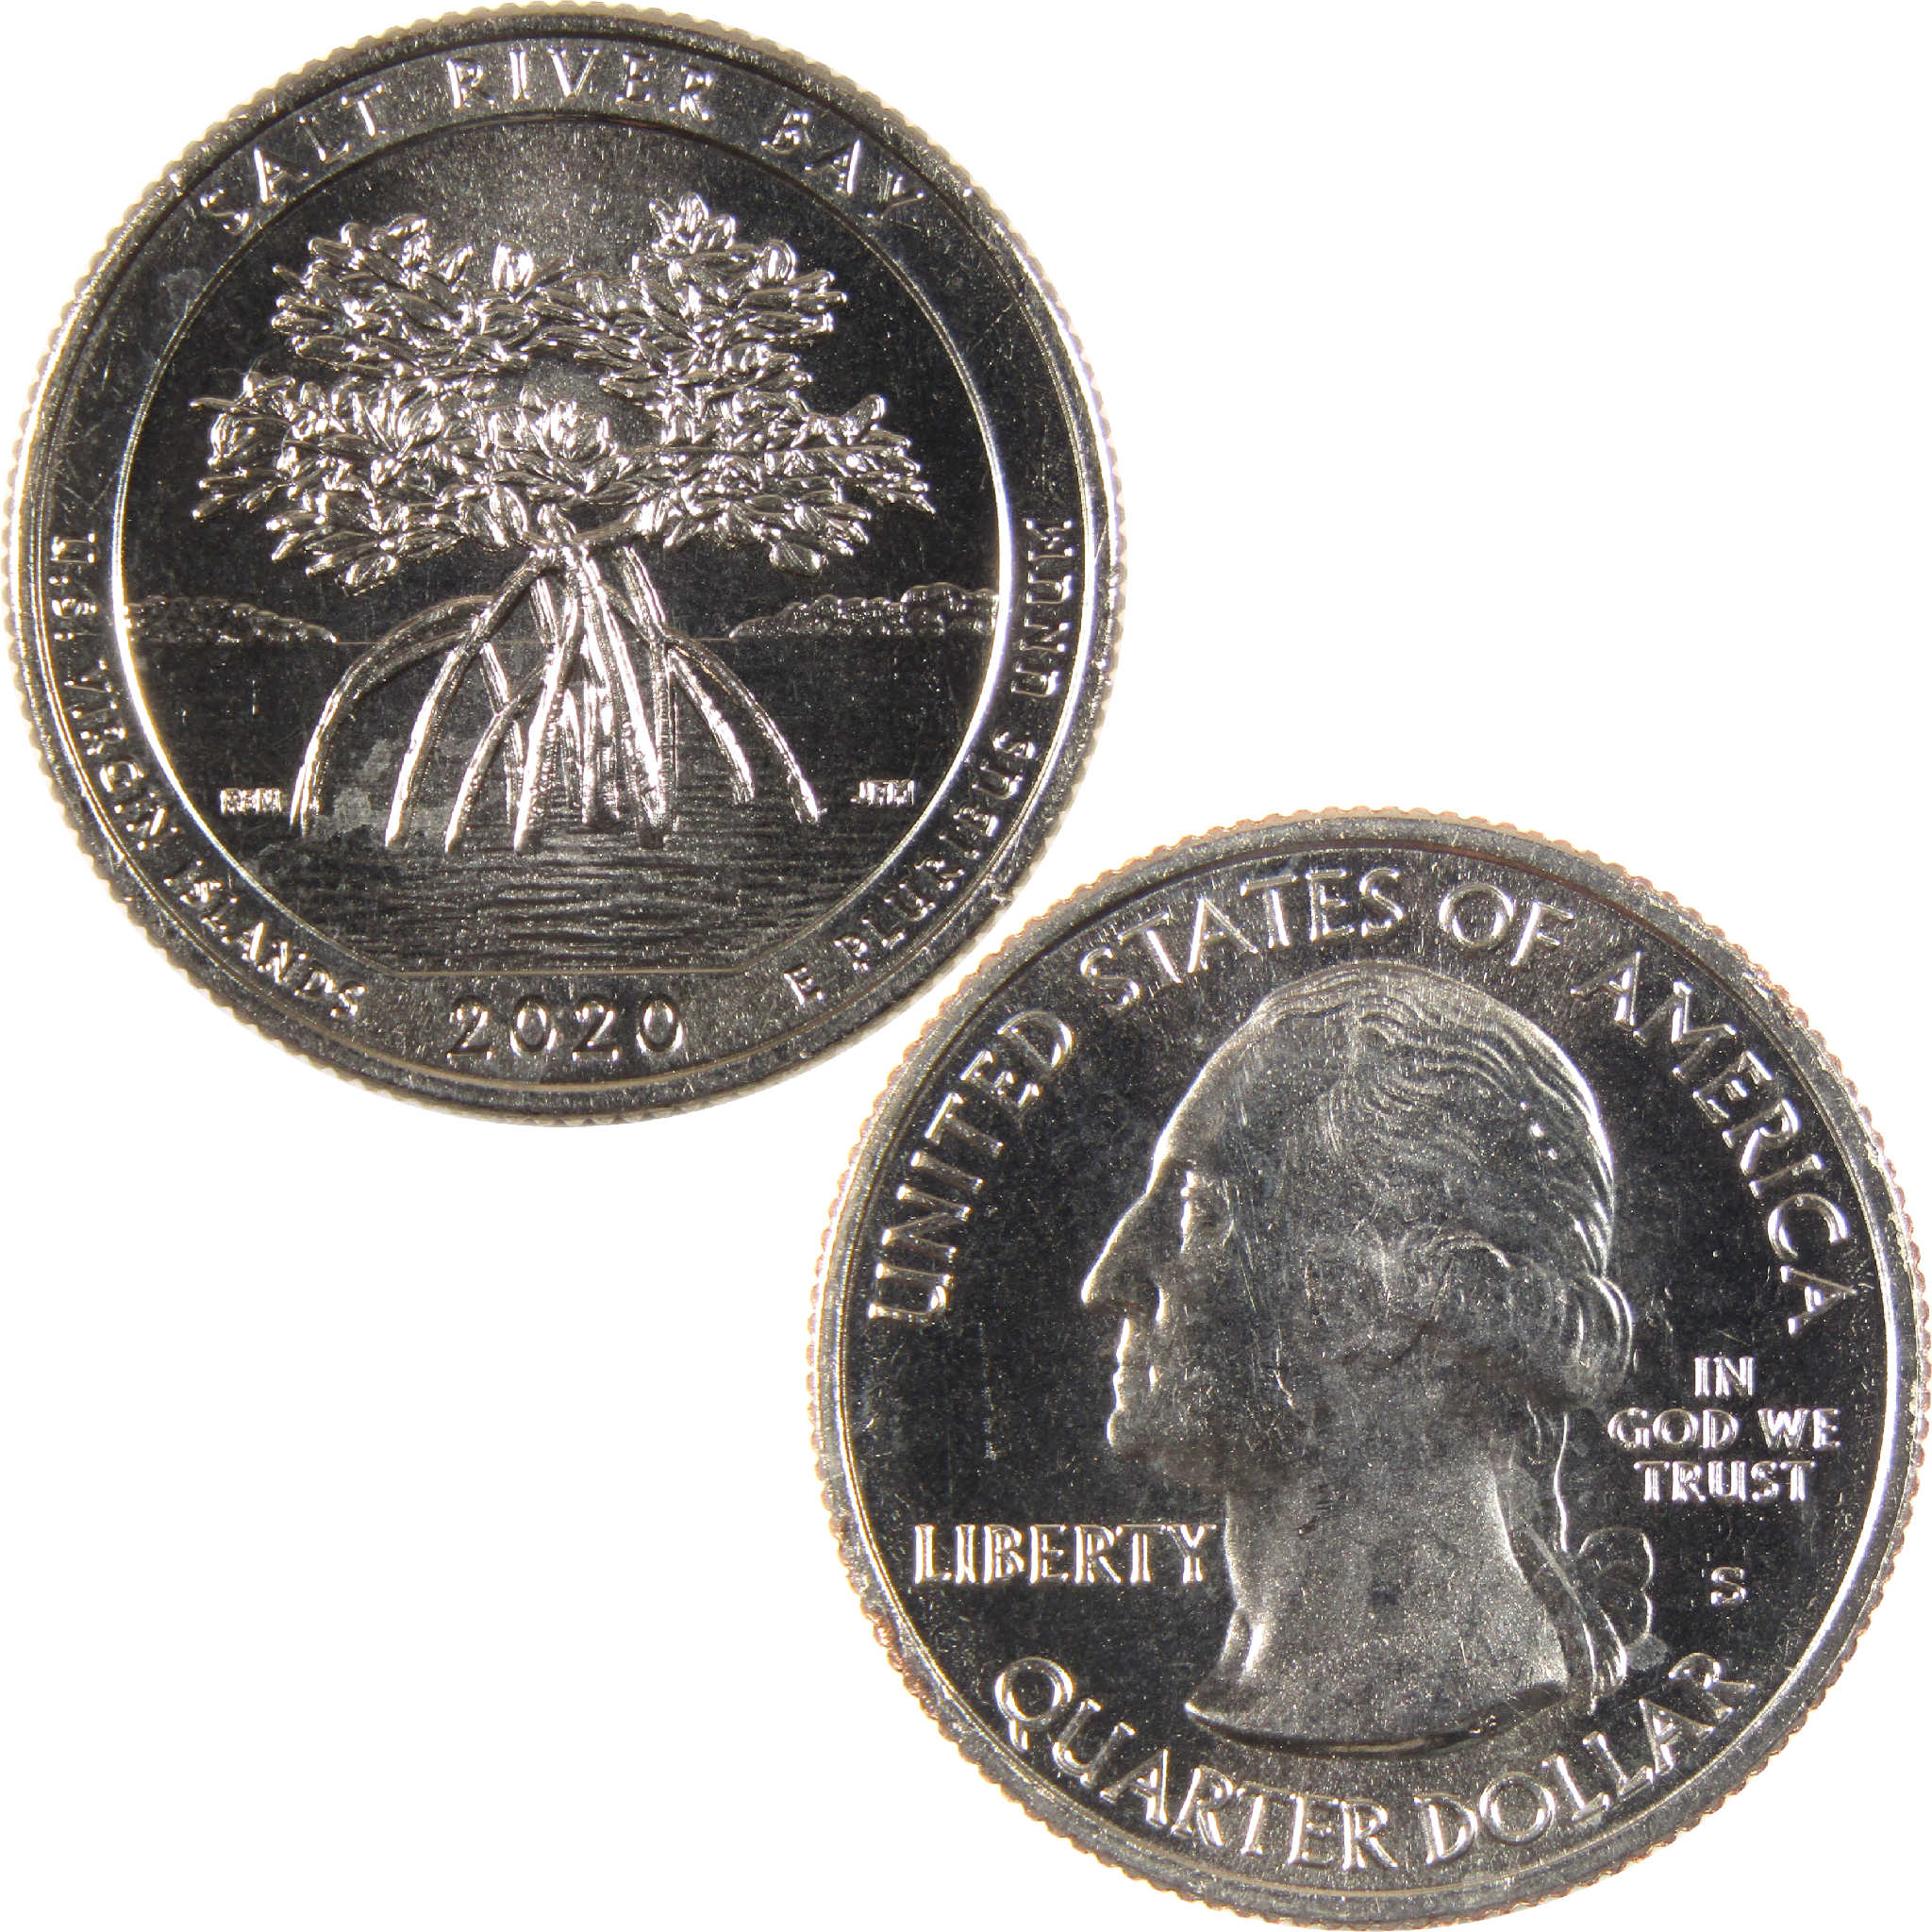 2020 S Salt River Bay National Park Quarter Uncirculated Clad 25c Coin